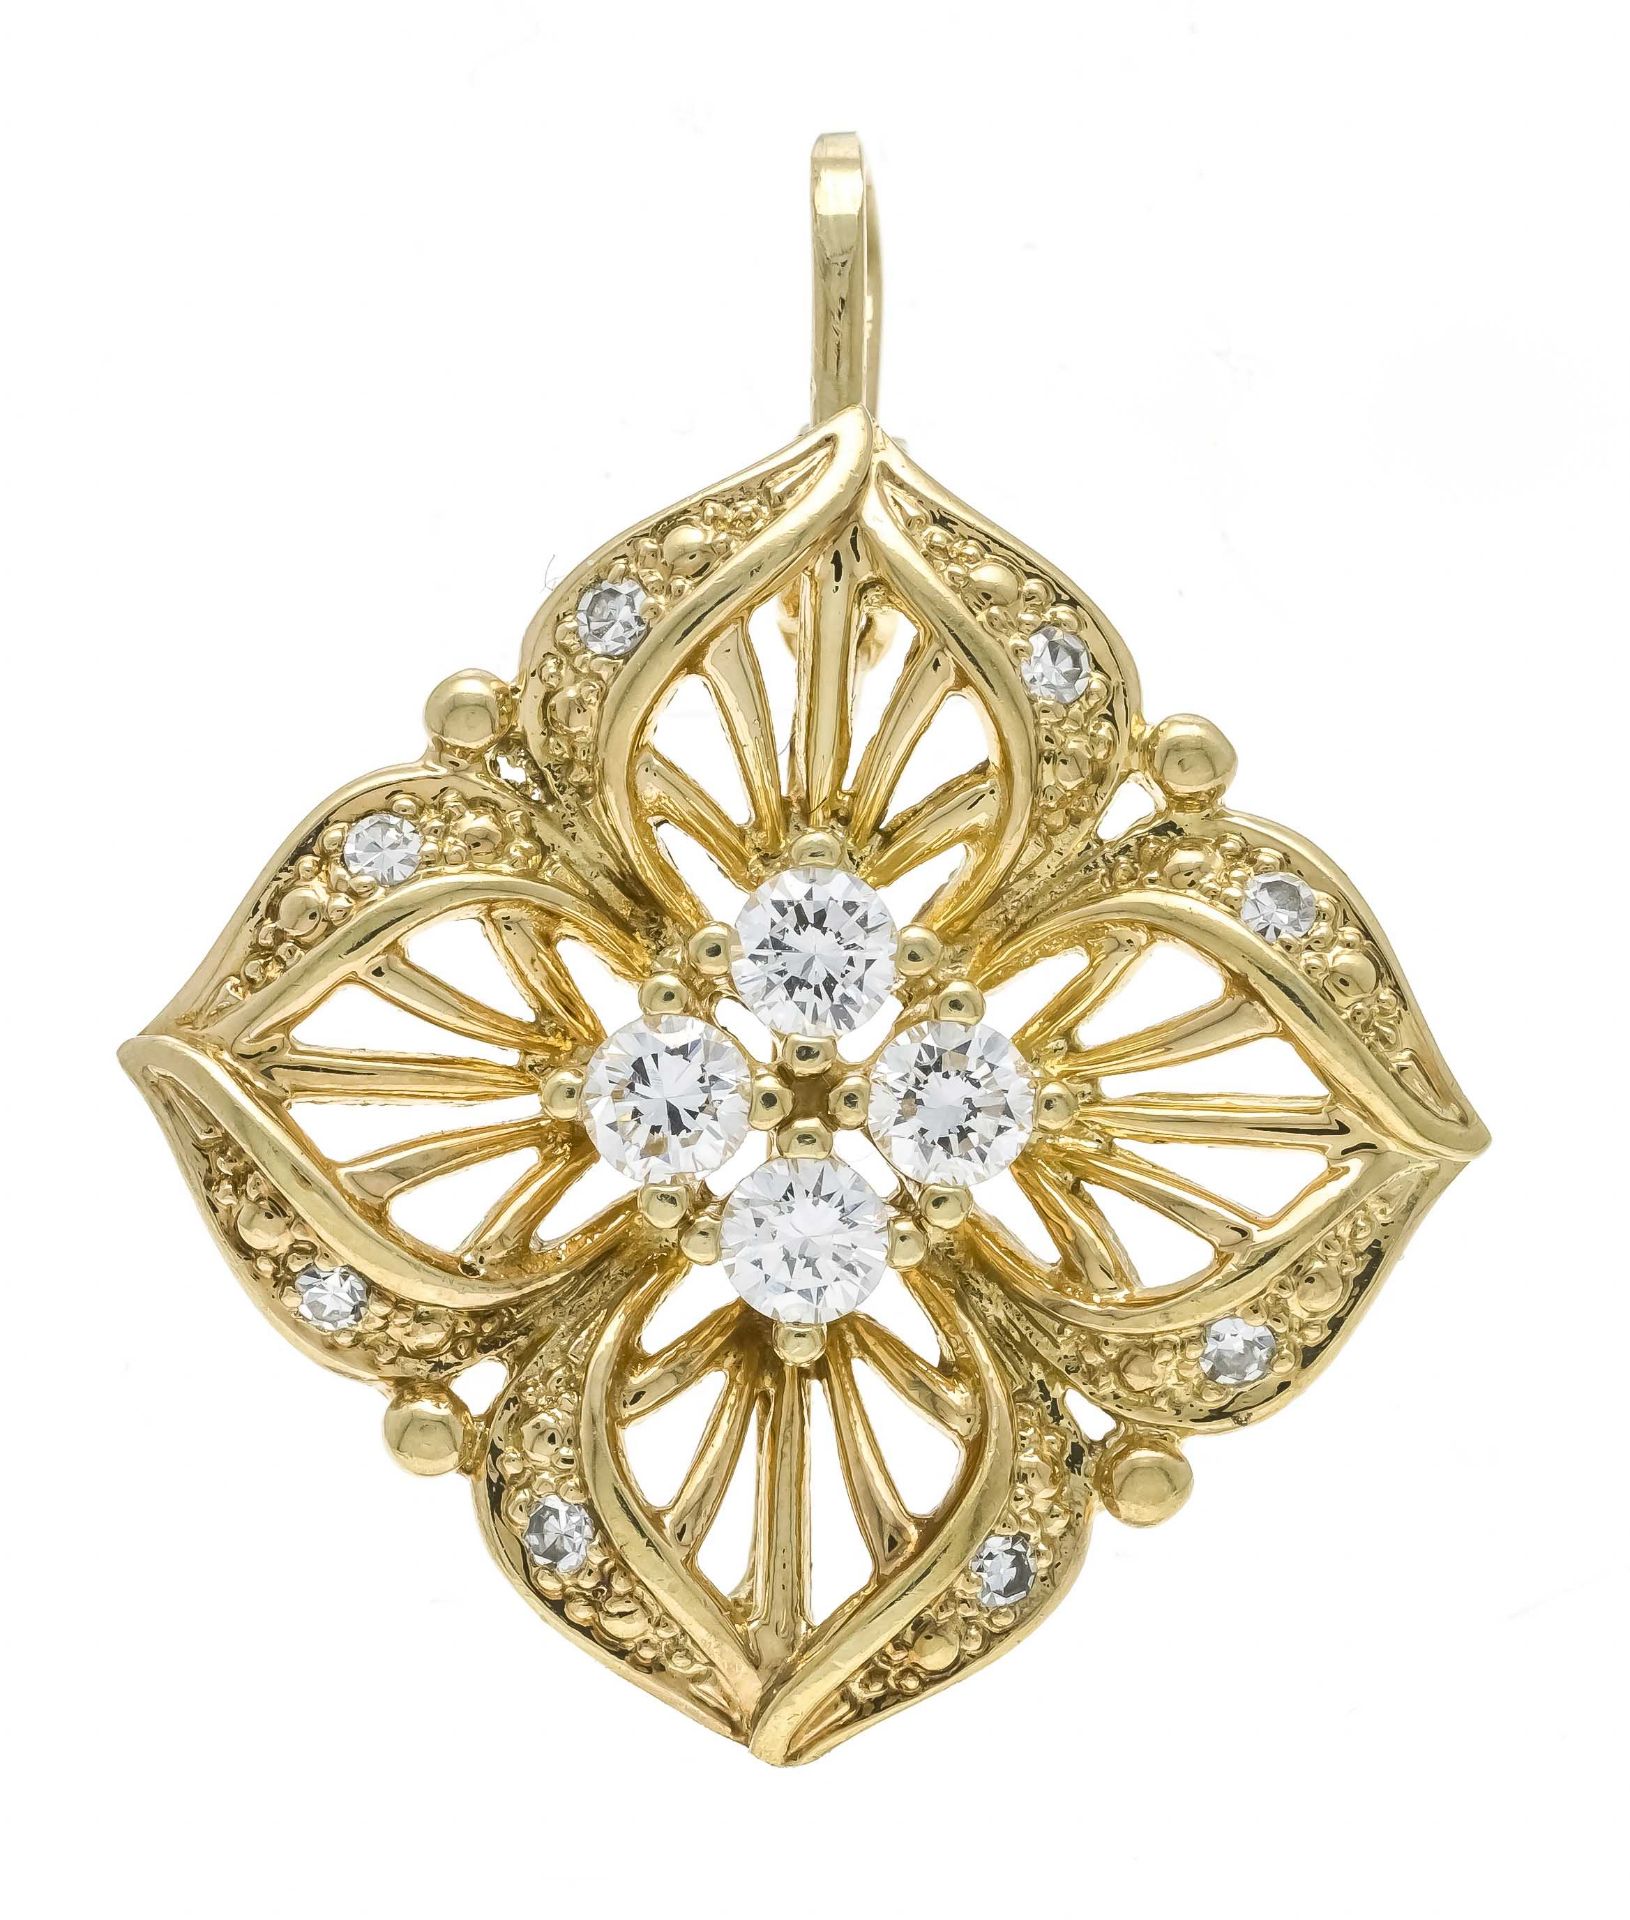 Filigree brilliant-cut diamond pendant GG 900/000 with 4 brilliant-cut diamonds and 8 octagonal